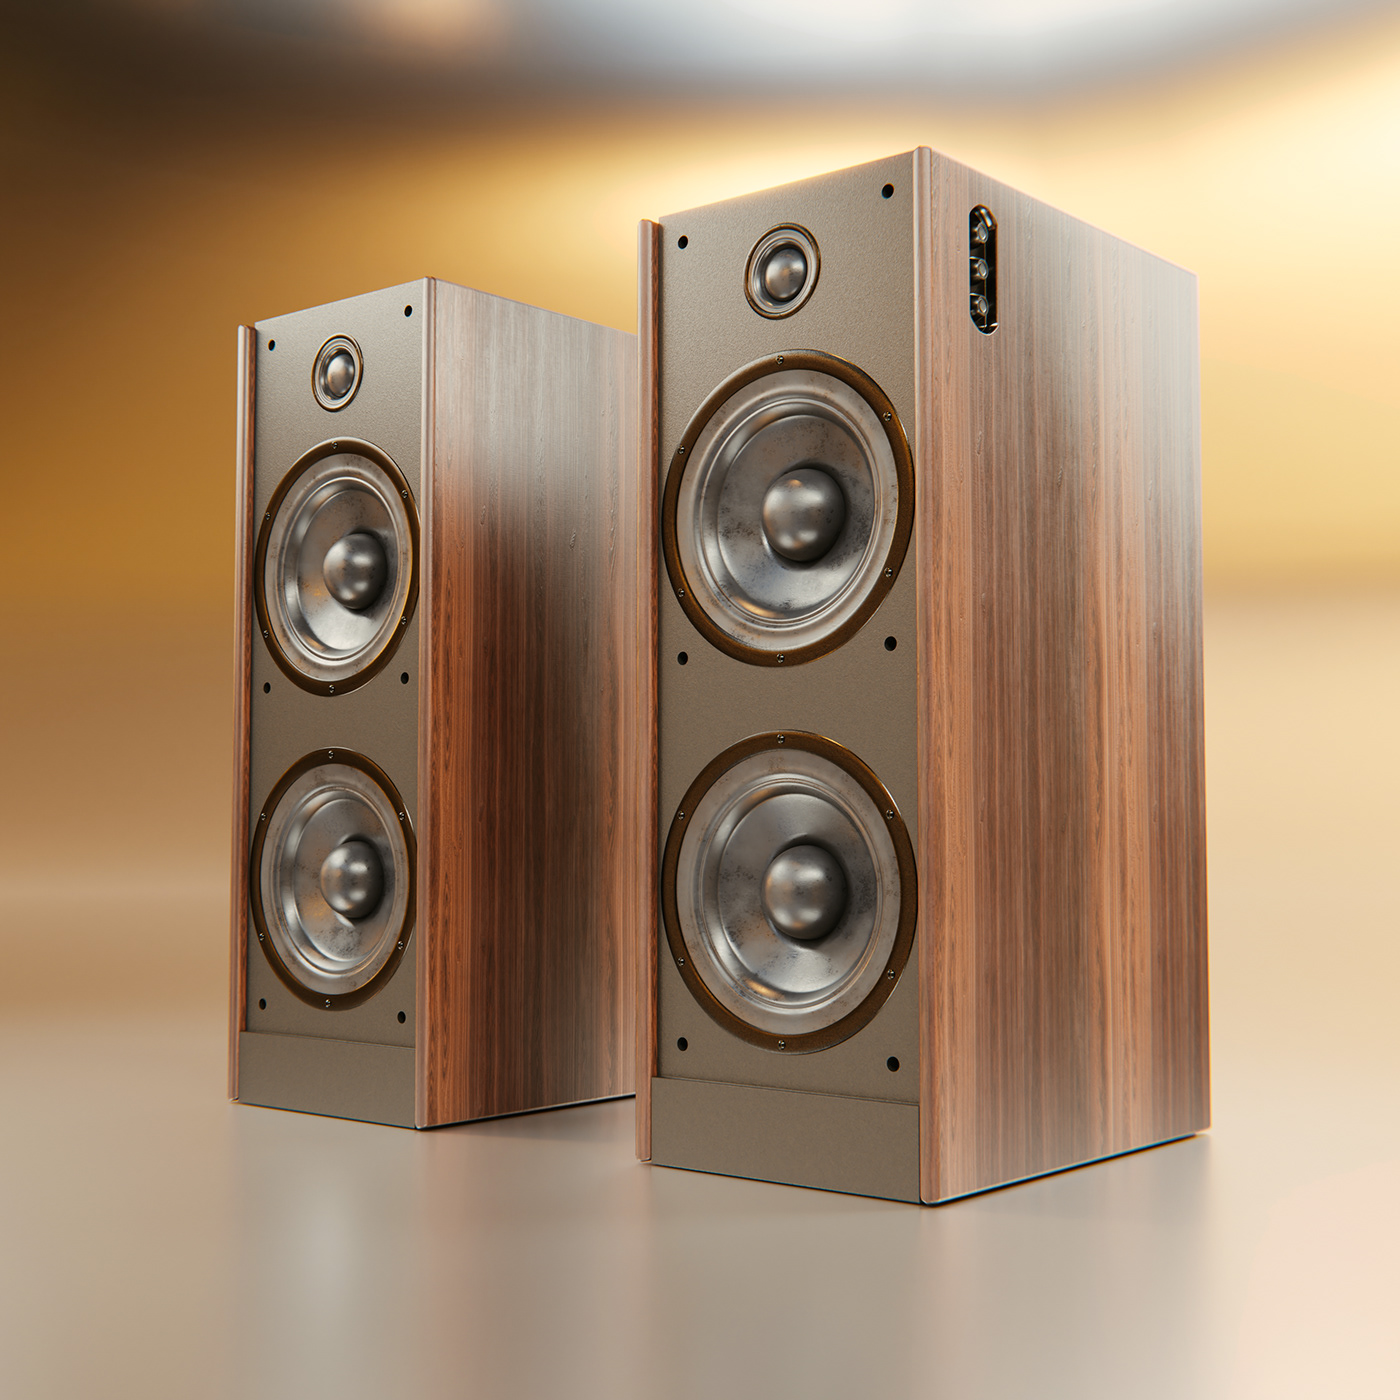 loudspeaker speaker product design  3d modeling visualization 3D Render archviz CGI modern